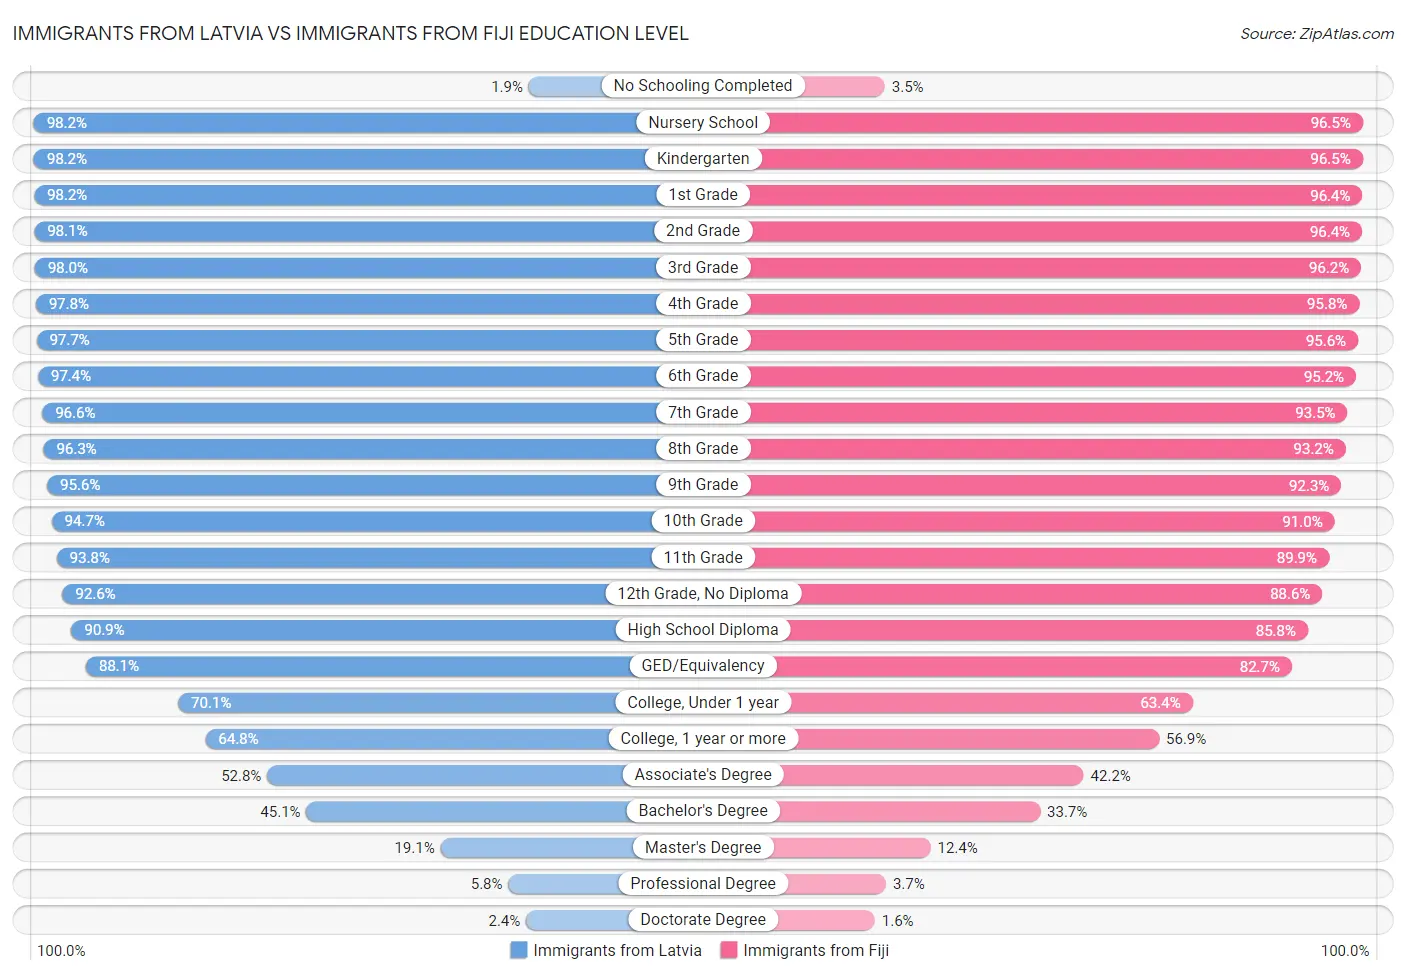 Immigrants from Latvia vs Immigrants from Fiji Education Level